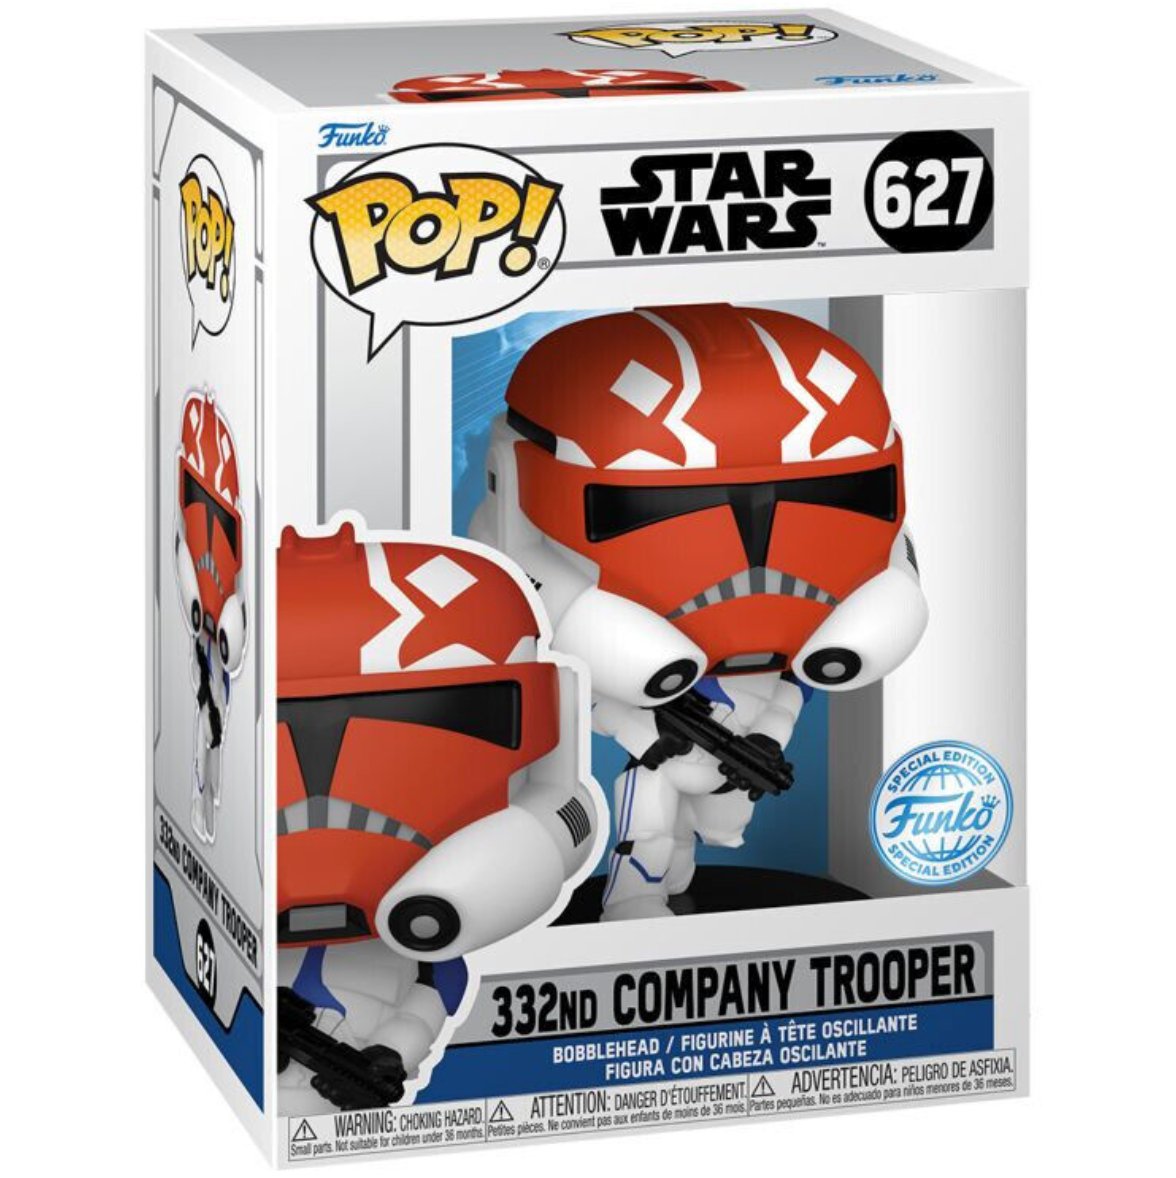 Star Wars - 332nd Company Trooper [Ahsoka's Tropper] (Special Edition) #627 - Funko Pop! Vinyl Star Wars - Persona Toys